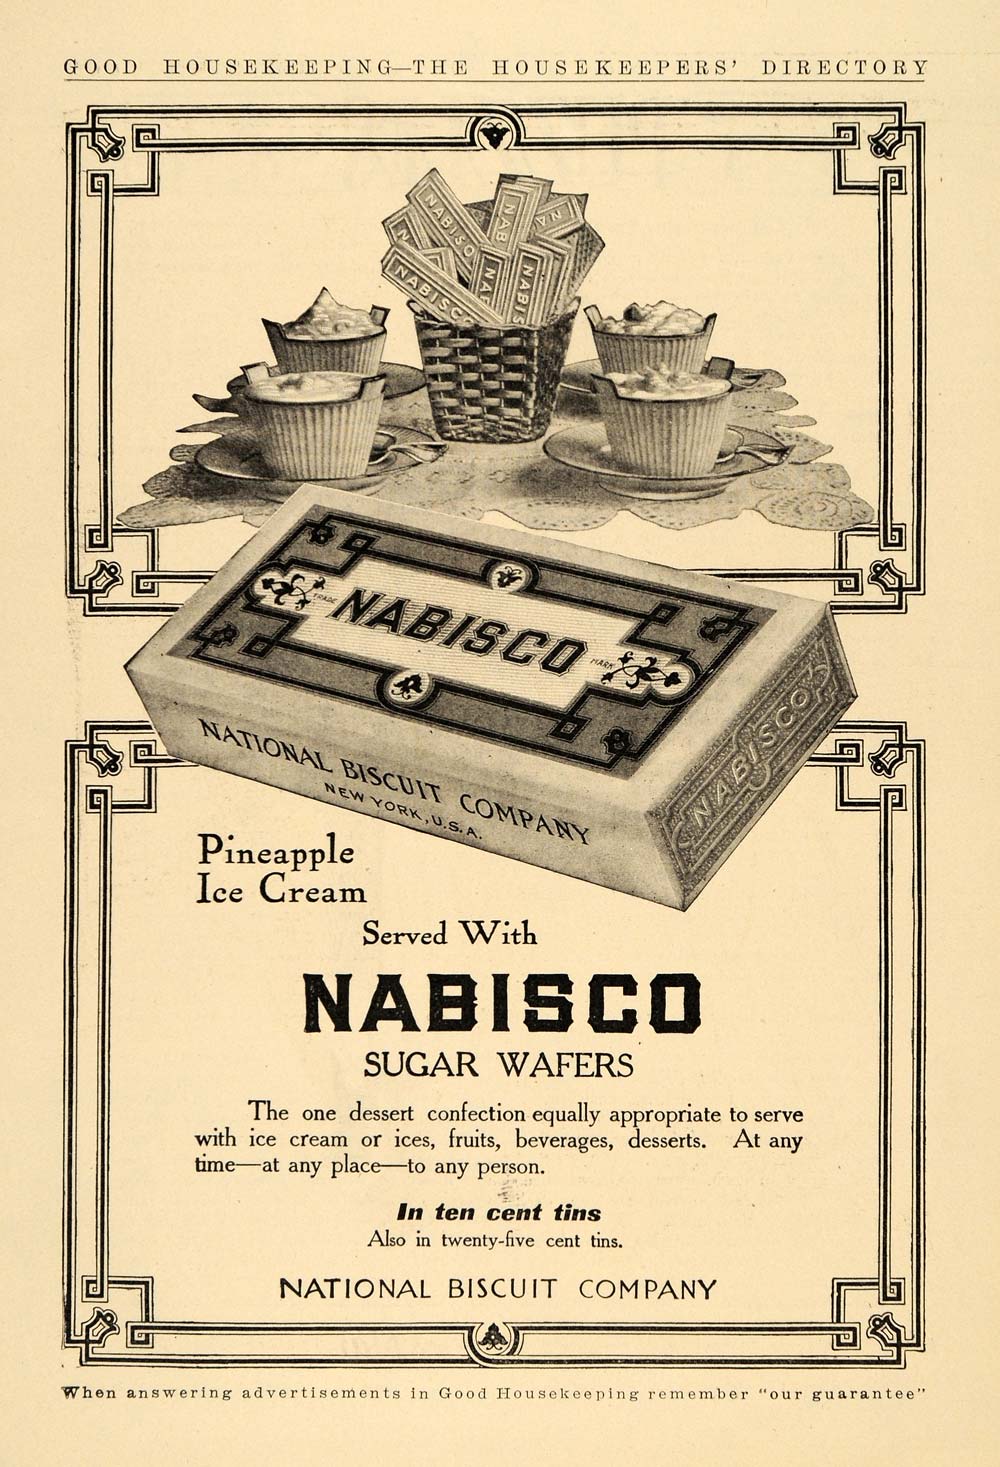 1909 Ad National Biscuit Co Nabisco Sugar Wafer Dessert - ORIGINAL GH3